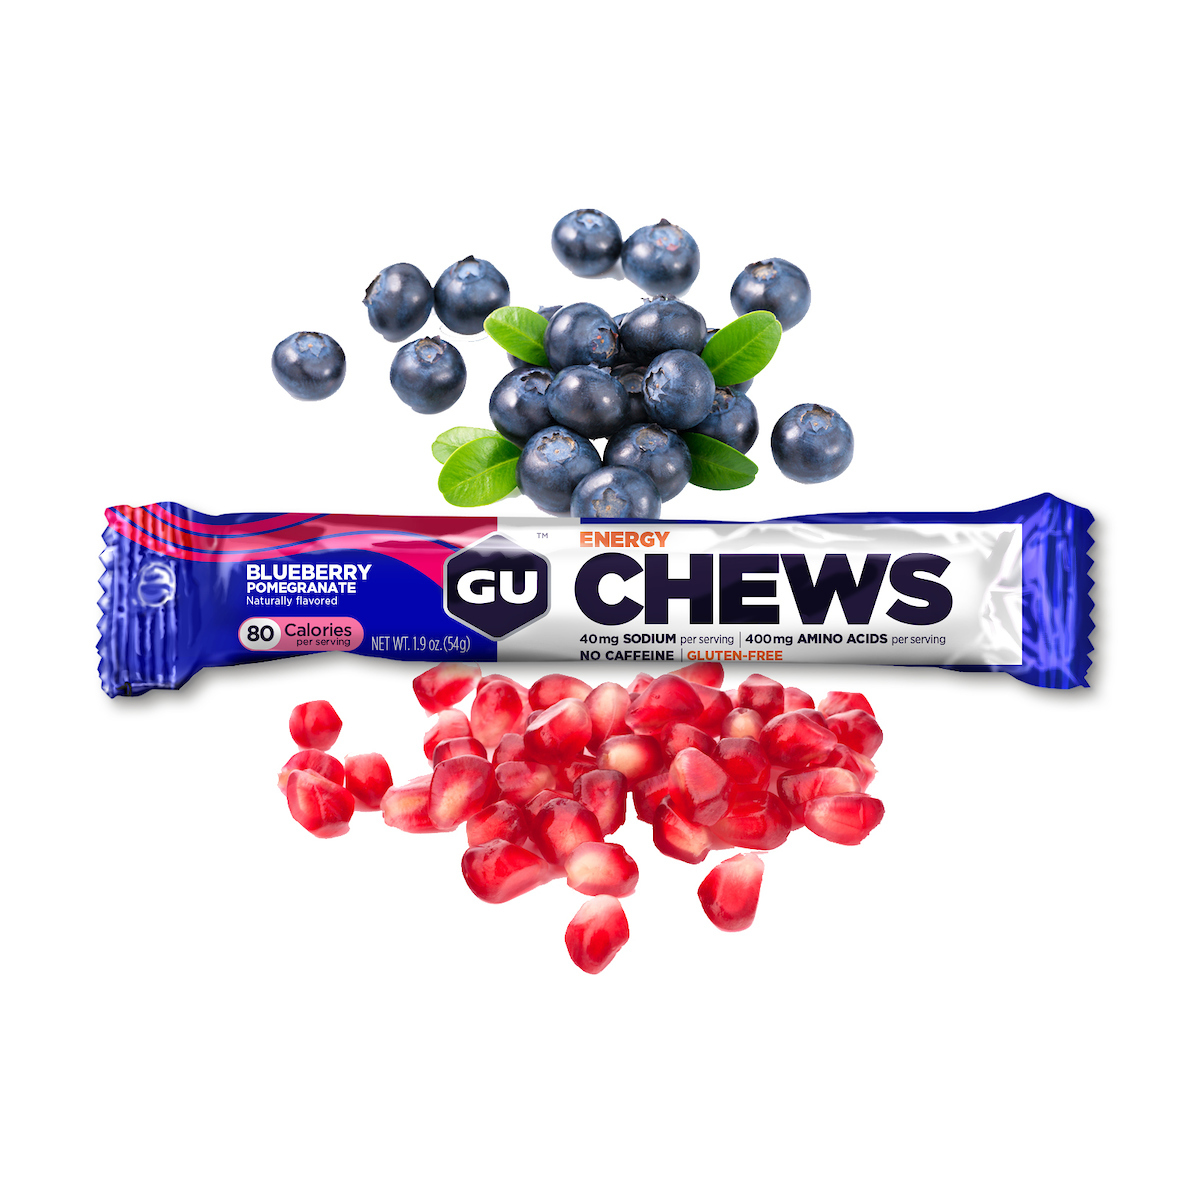 Energy Chews Fruchtgummis MHD 12.12.2022 Blueberry Pomegranate Blaubeere Granatapfel